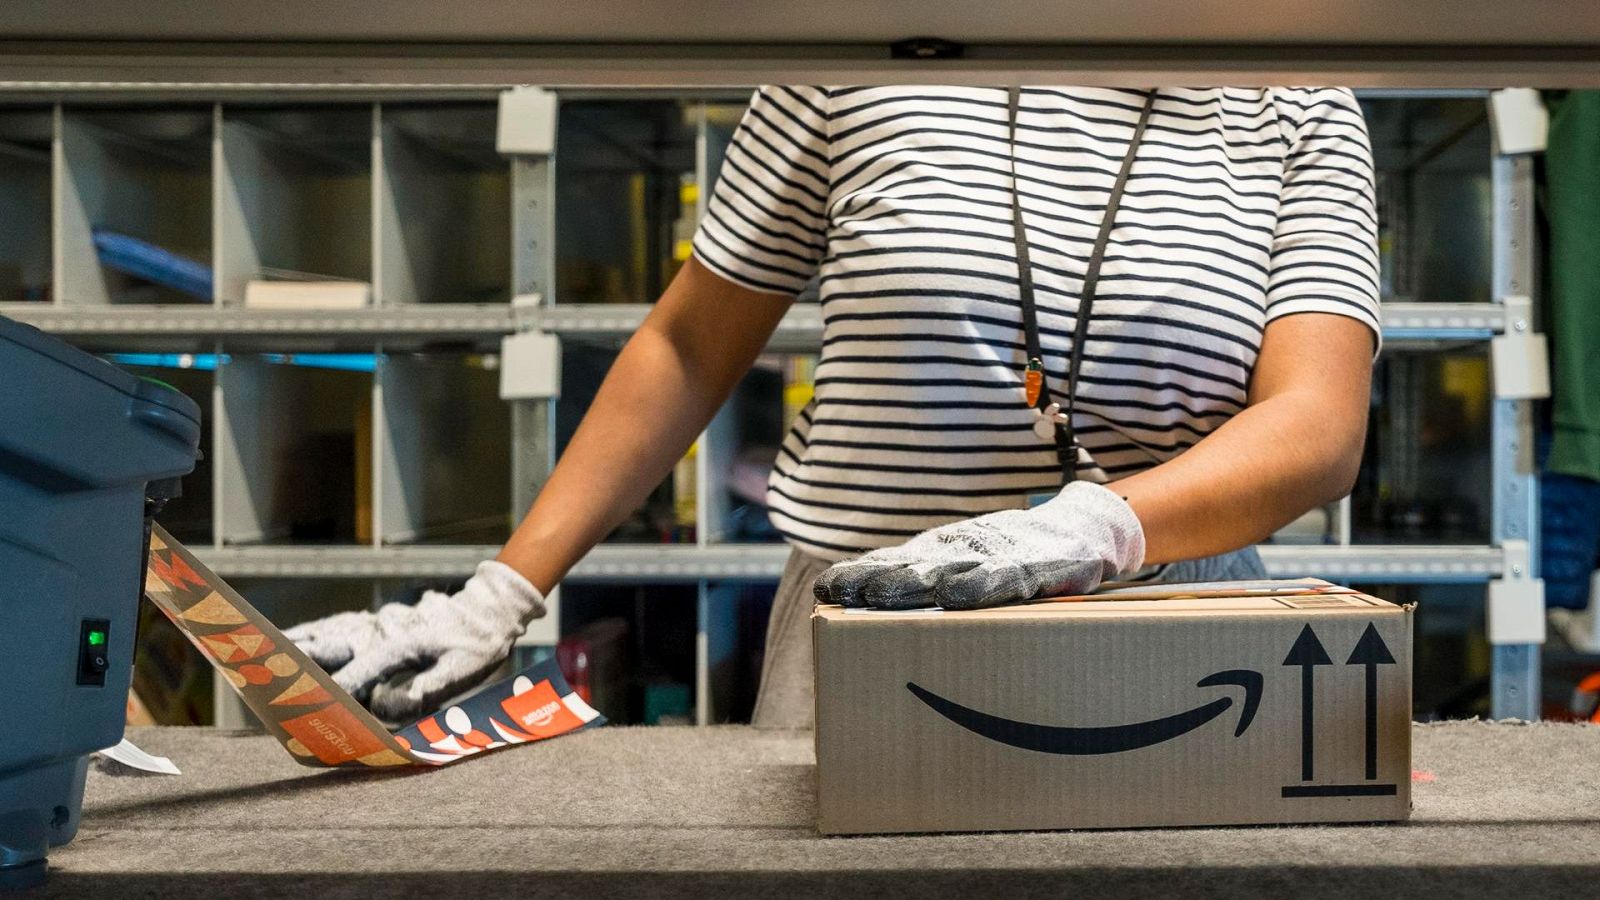 Competencia de Italia multa a Amazon con 10 millones por inducir a compra periódica